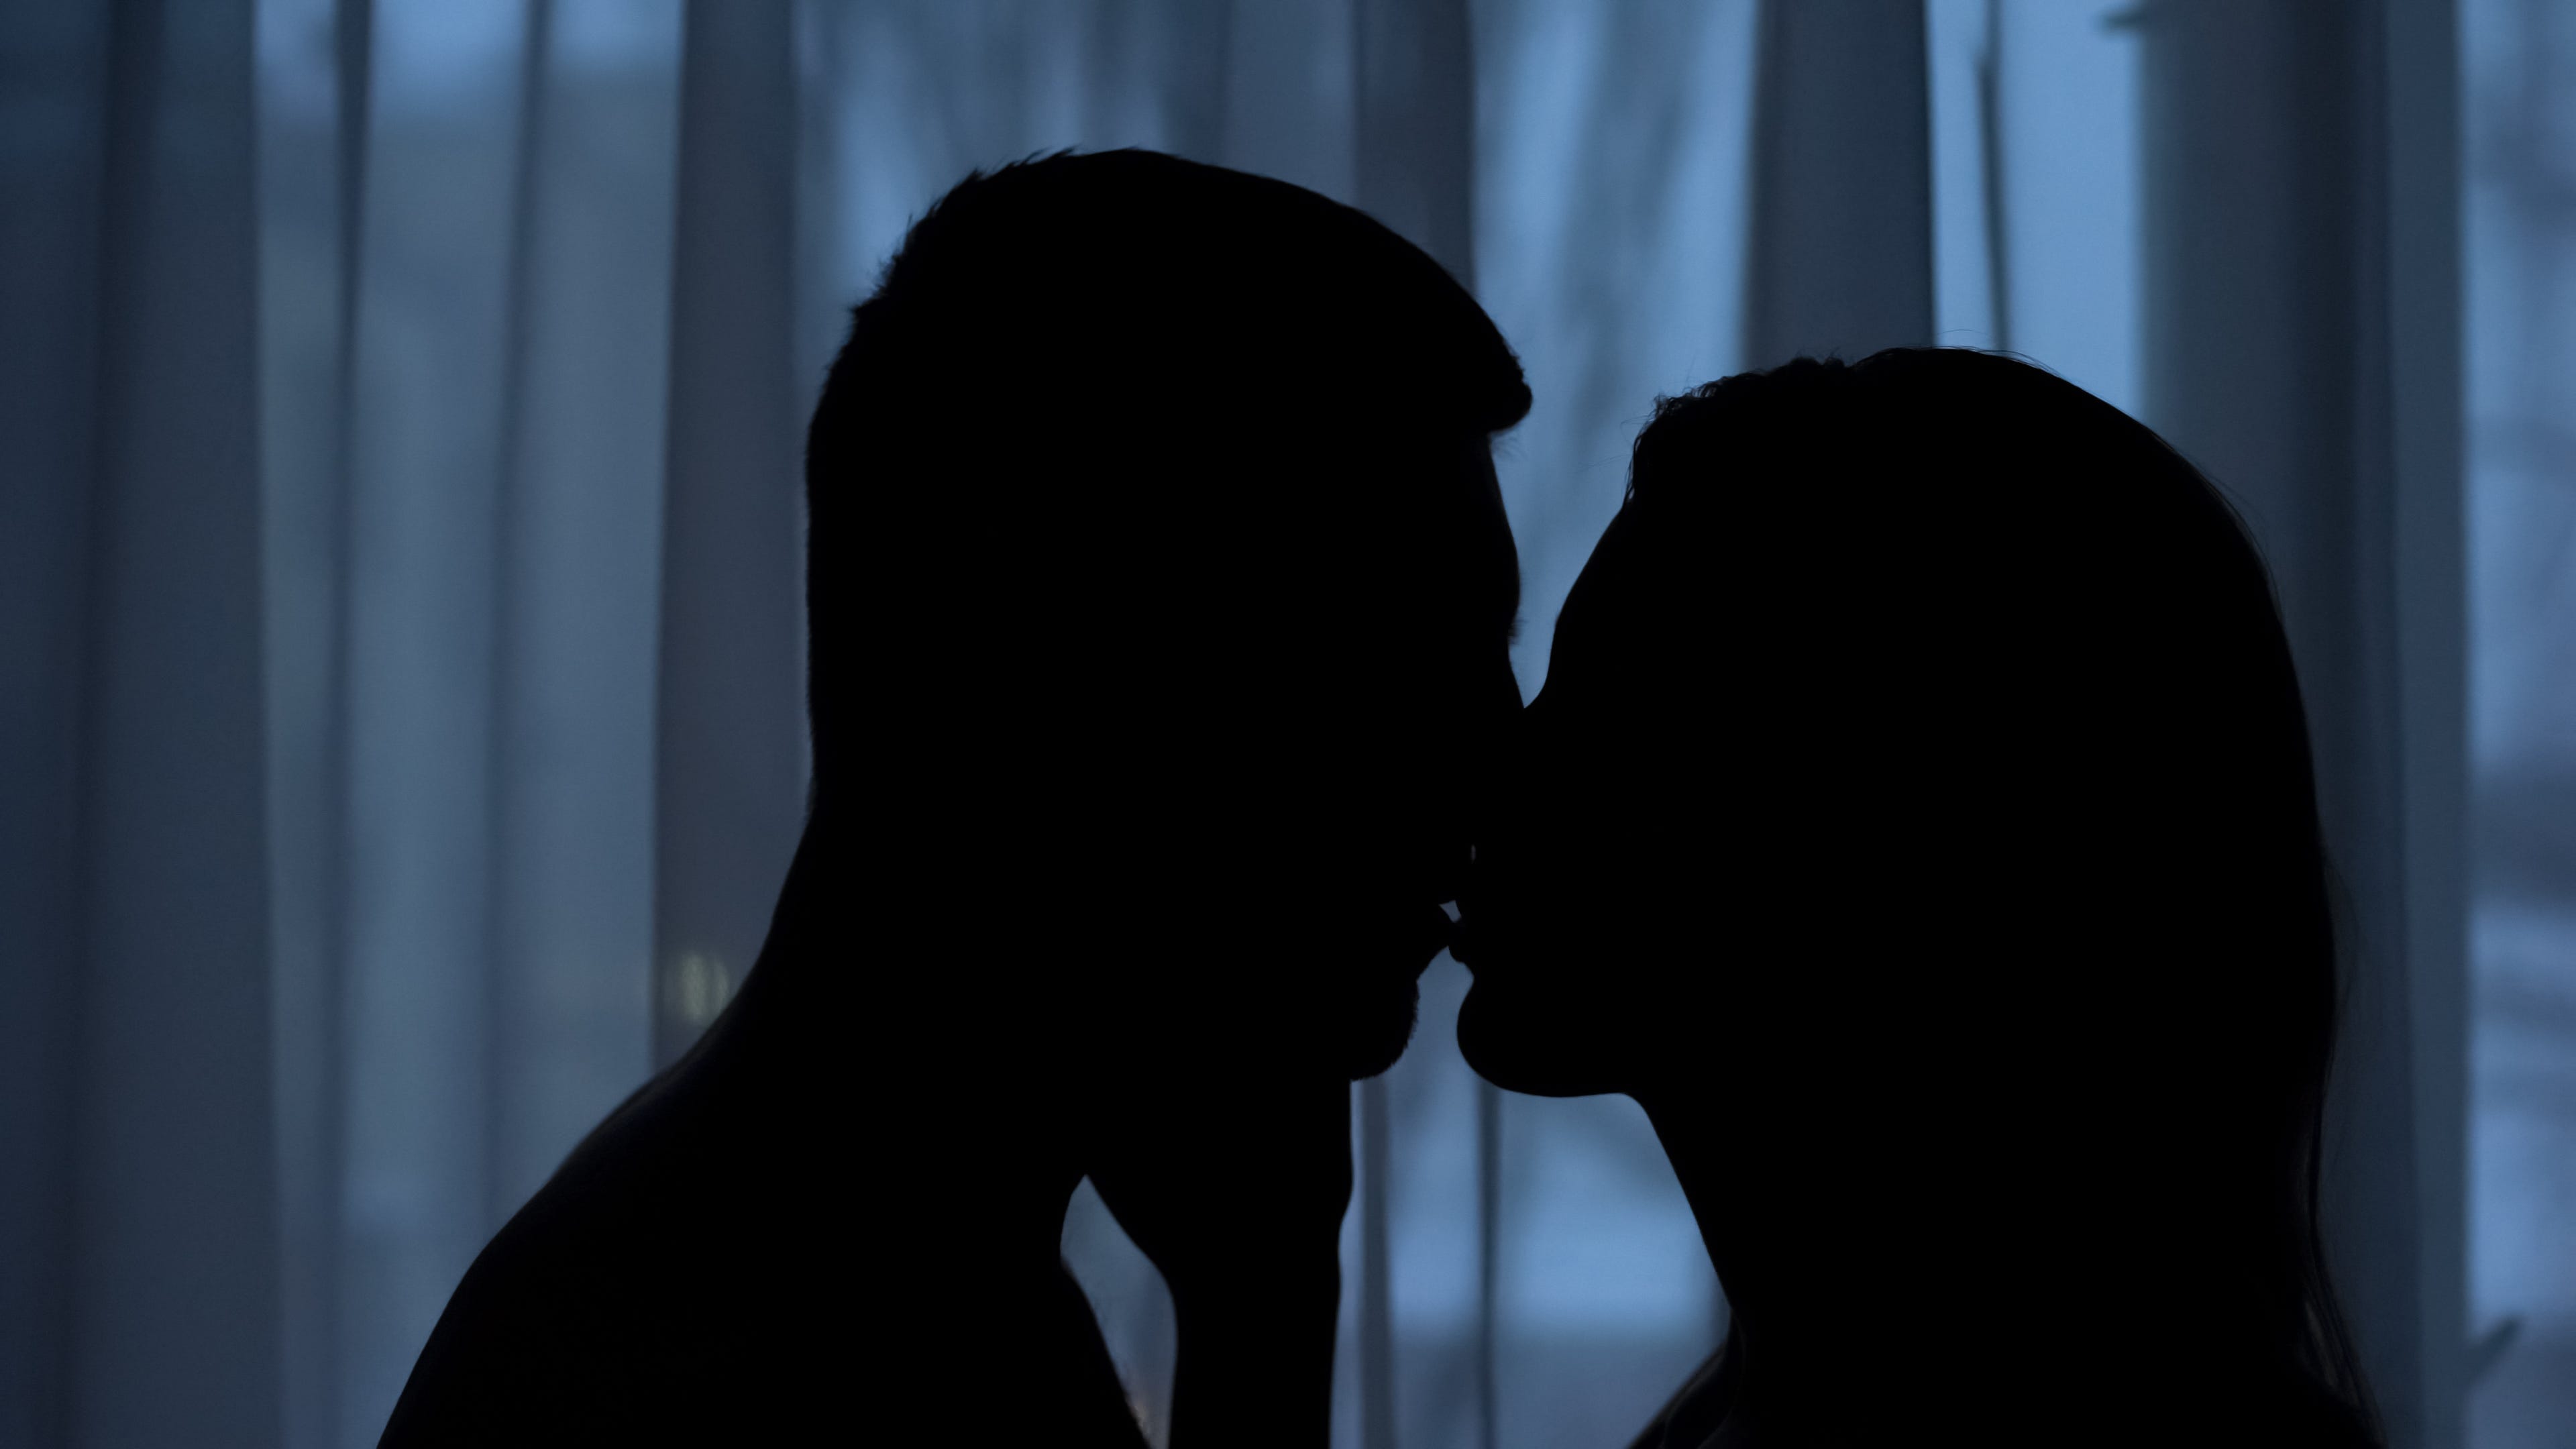 Rajwap Sex Youtube Video Com - Sex, sexual fantasies, role-play: Porn sets unrealistic expectations